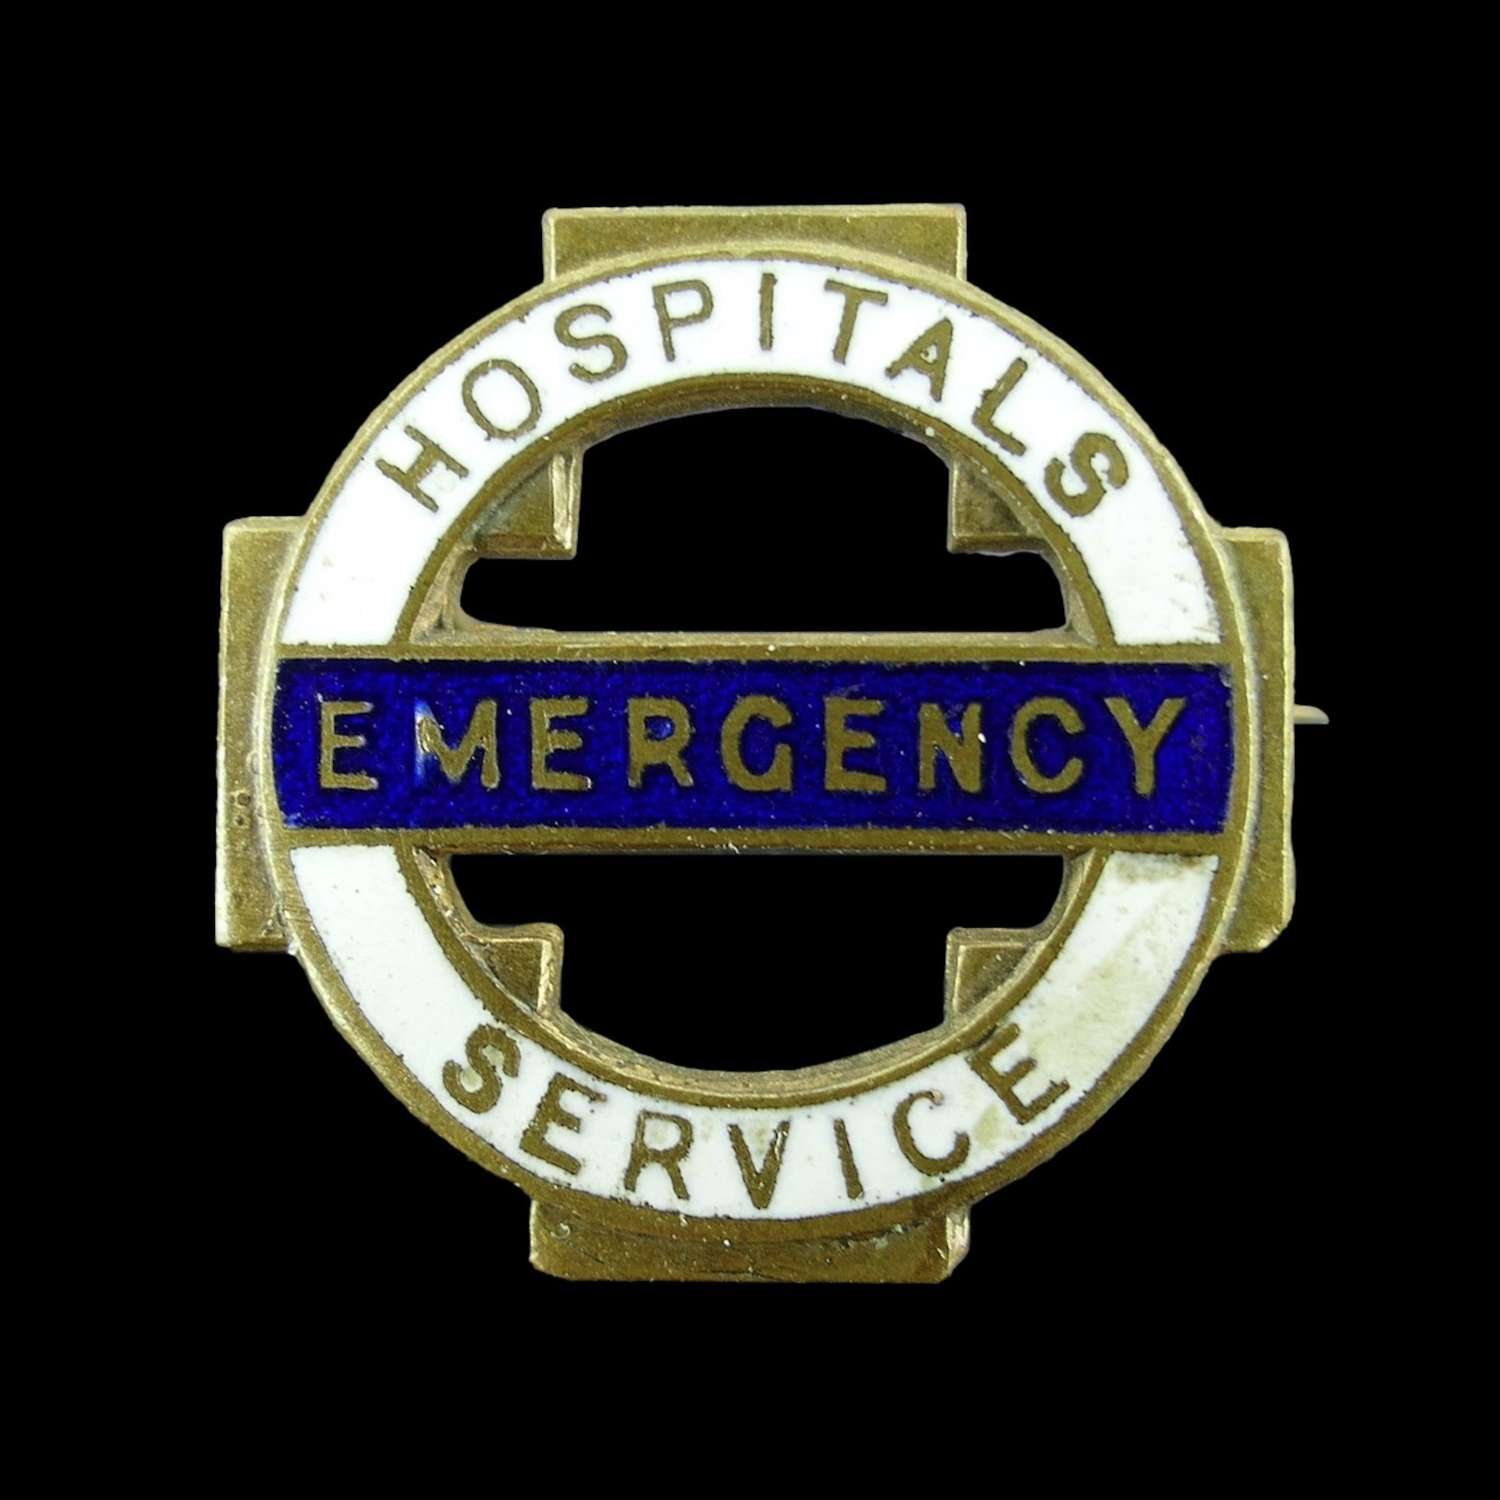 Hospitals Emergency Service badge